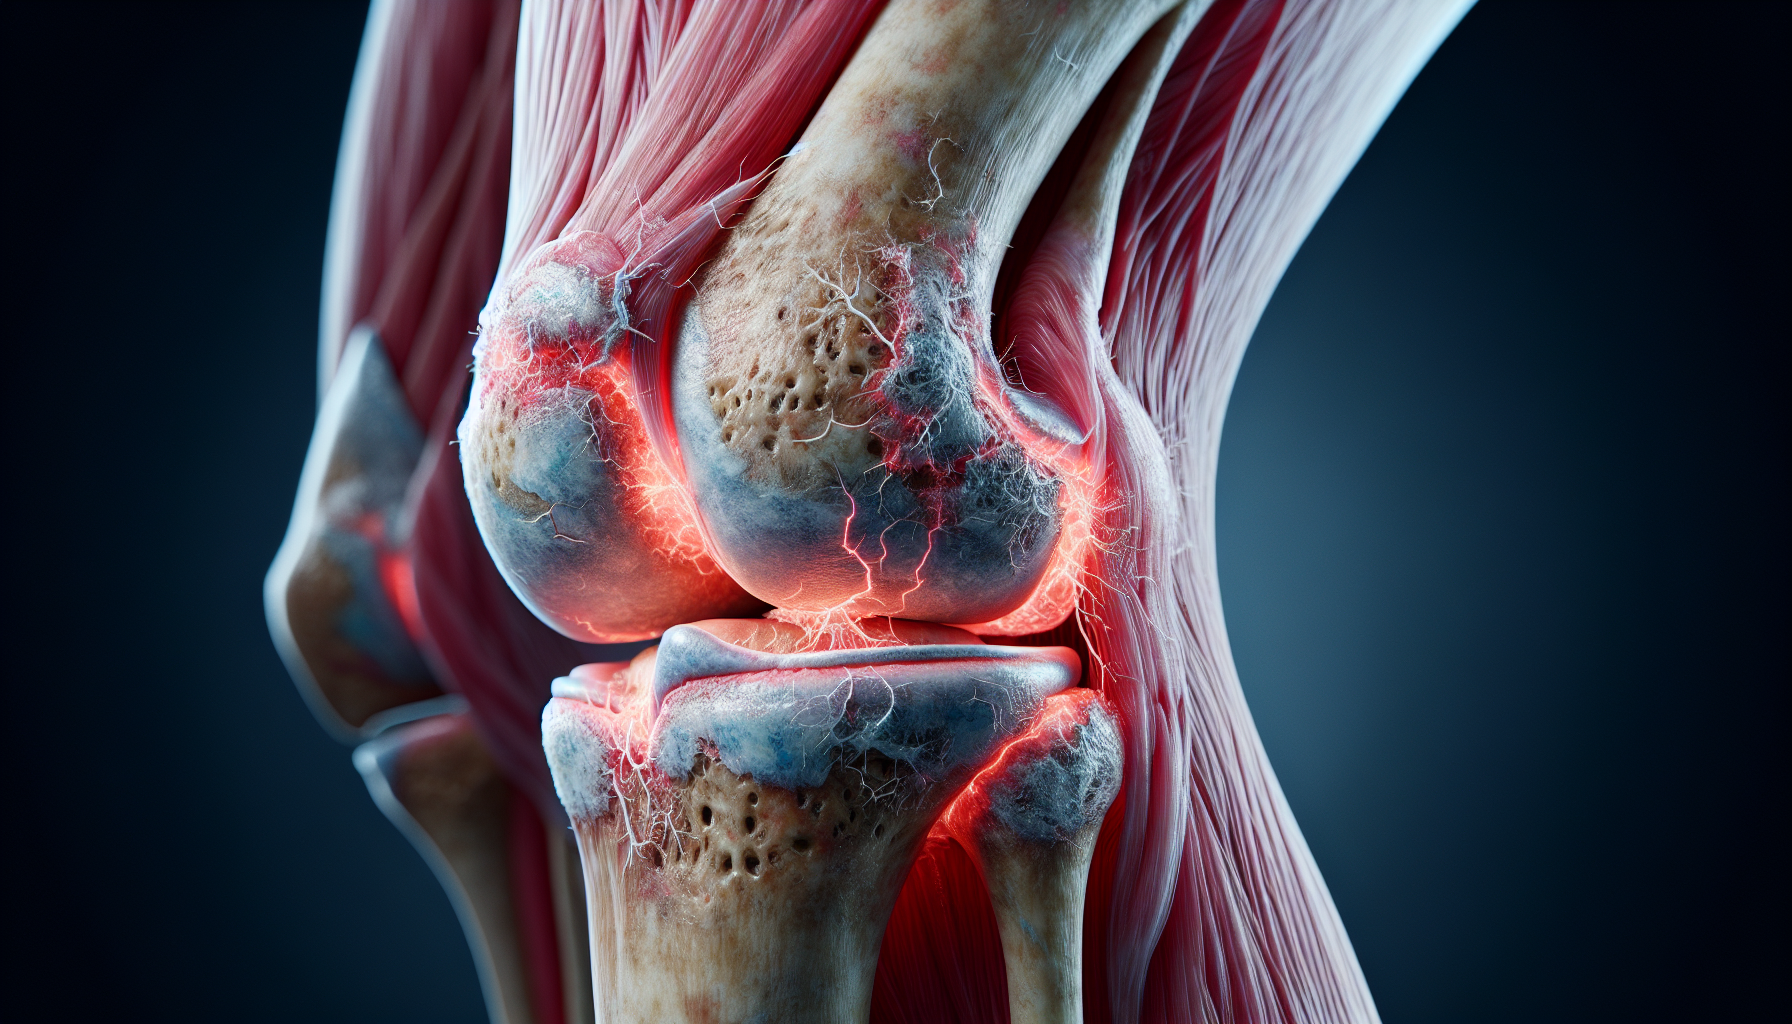 Illustration of knee joint with arthritis